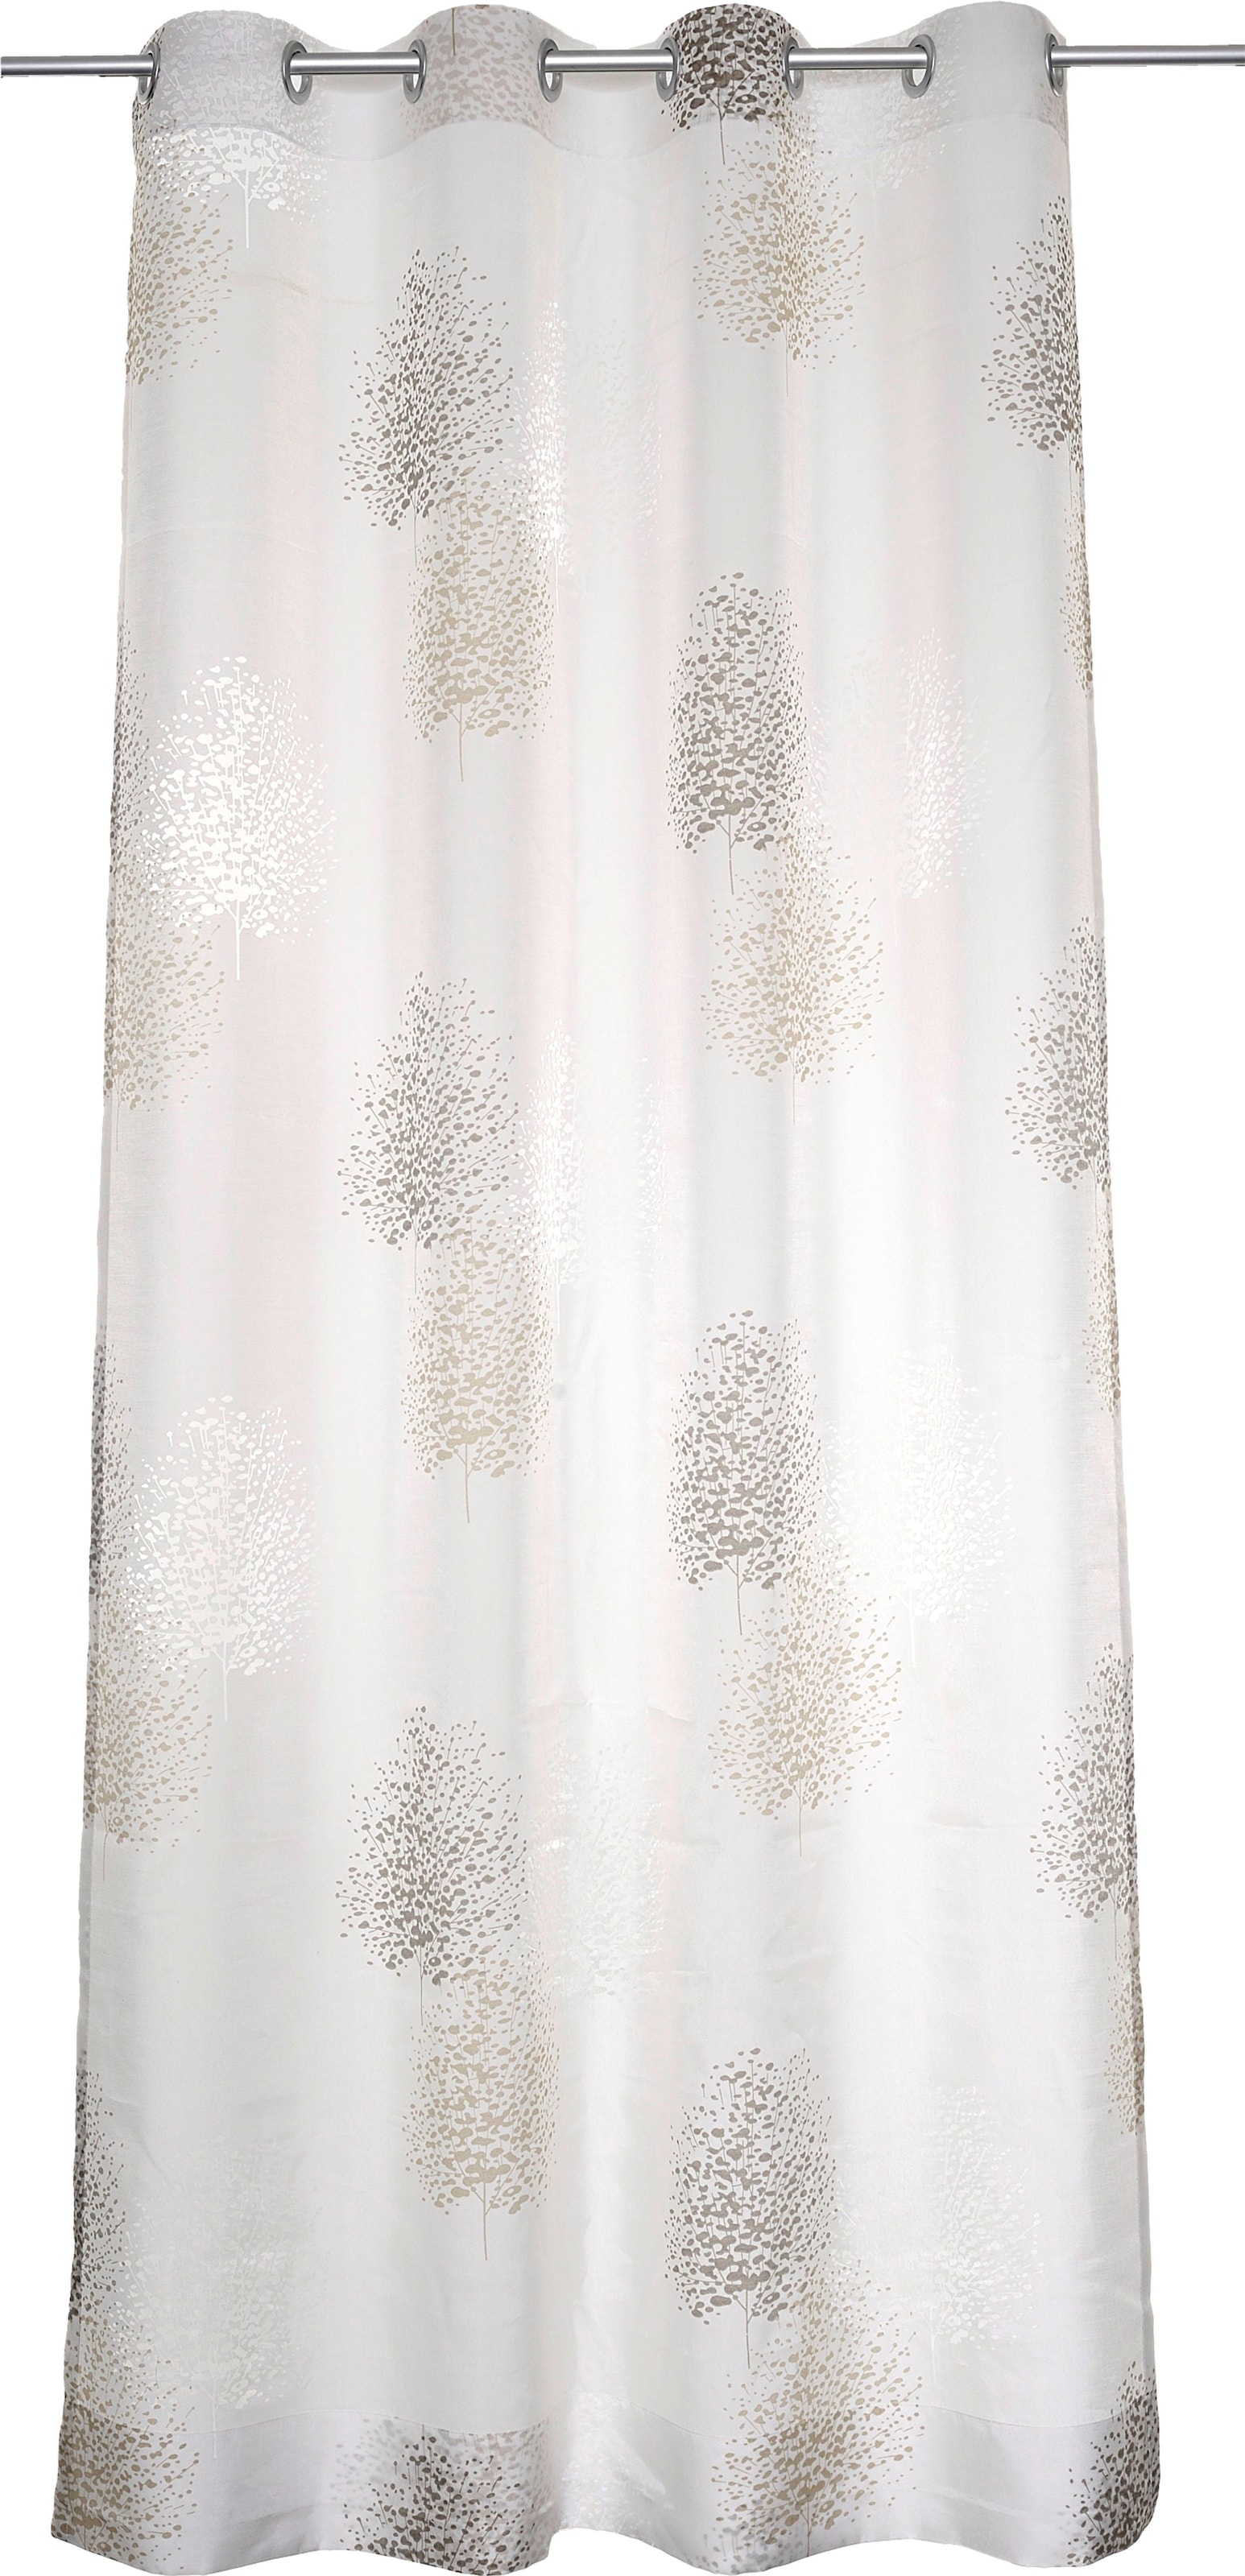 Kutti Vorhang »Belinda«, kaufen halbtransparent, bedruckt, Ausbrenner, (1 Viskose-Polyester online St.), Gardine